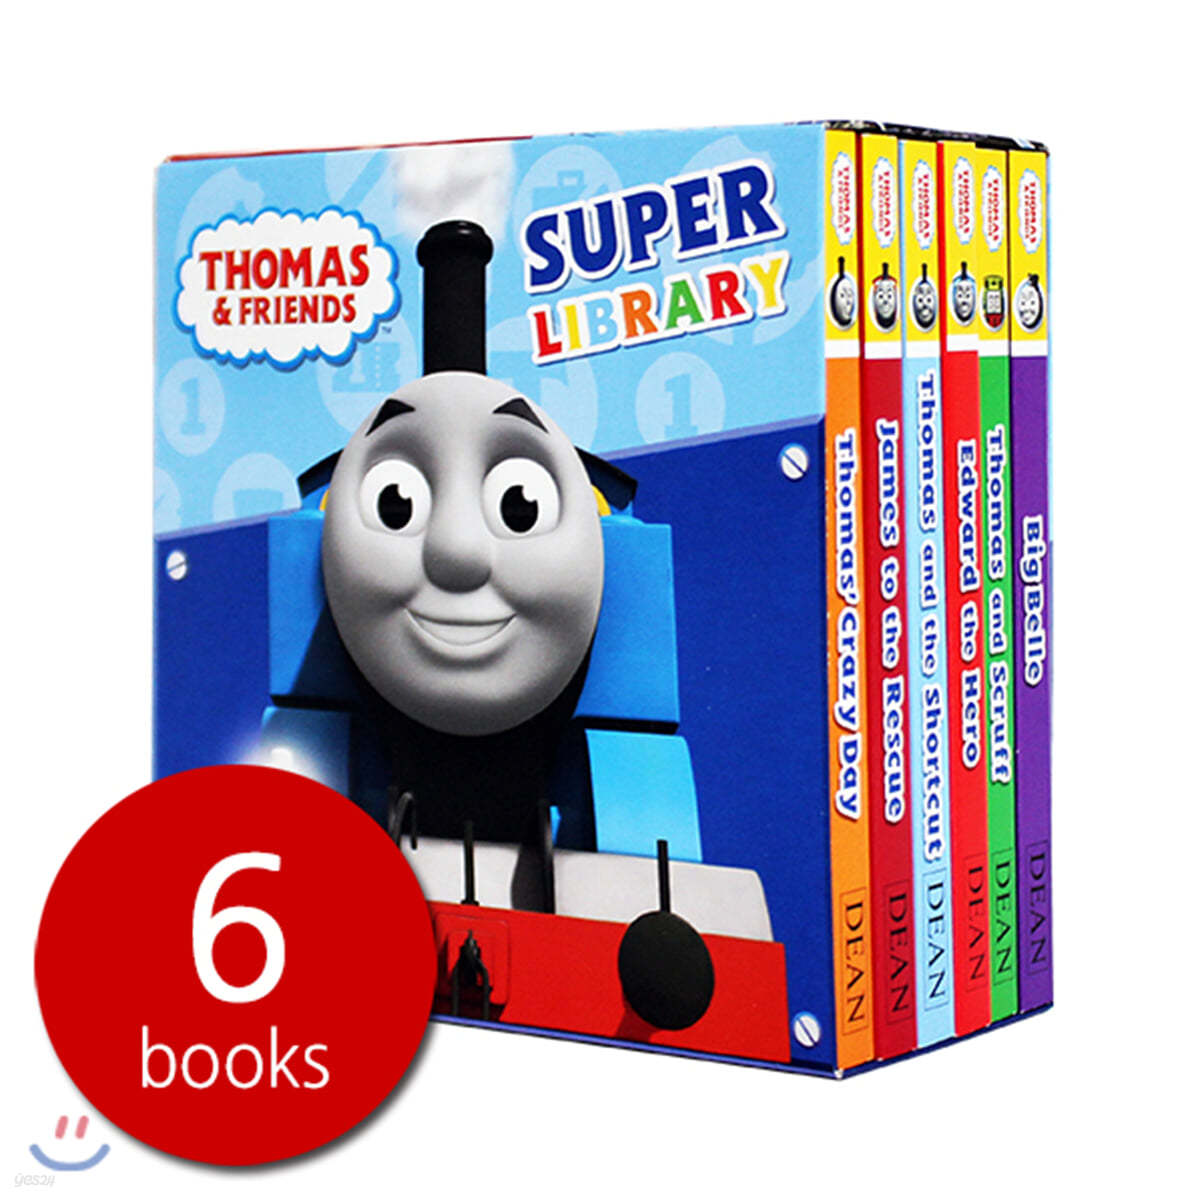 Thomas &amp; Friends Super Library 6 Books Set  : 토마스와 친구들 슈퍼 라이브러리 북 세트